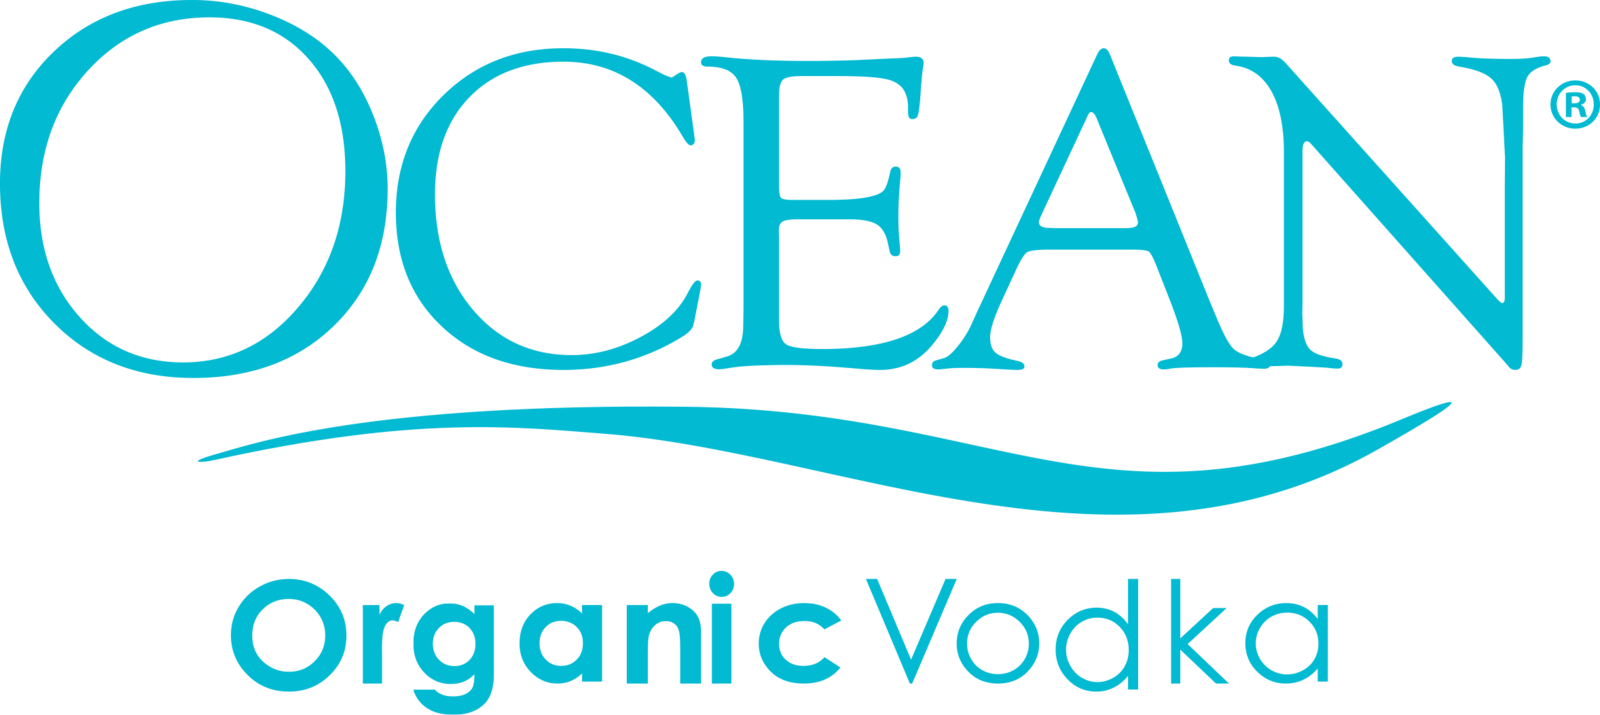 ocean-vodka-colour